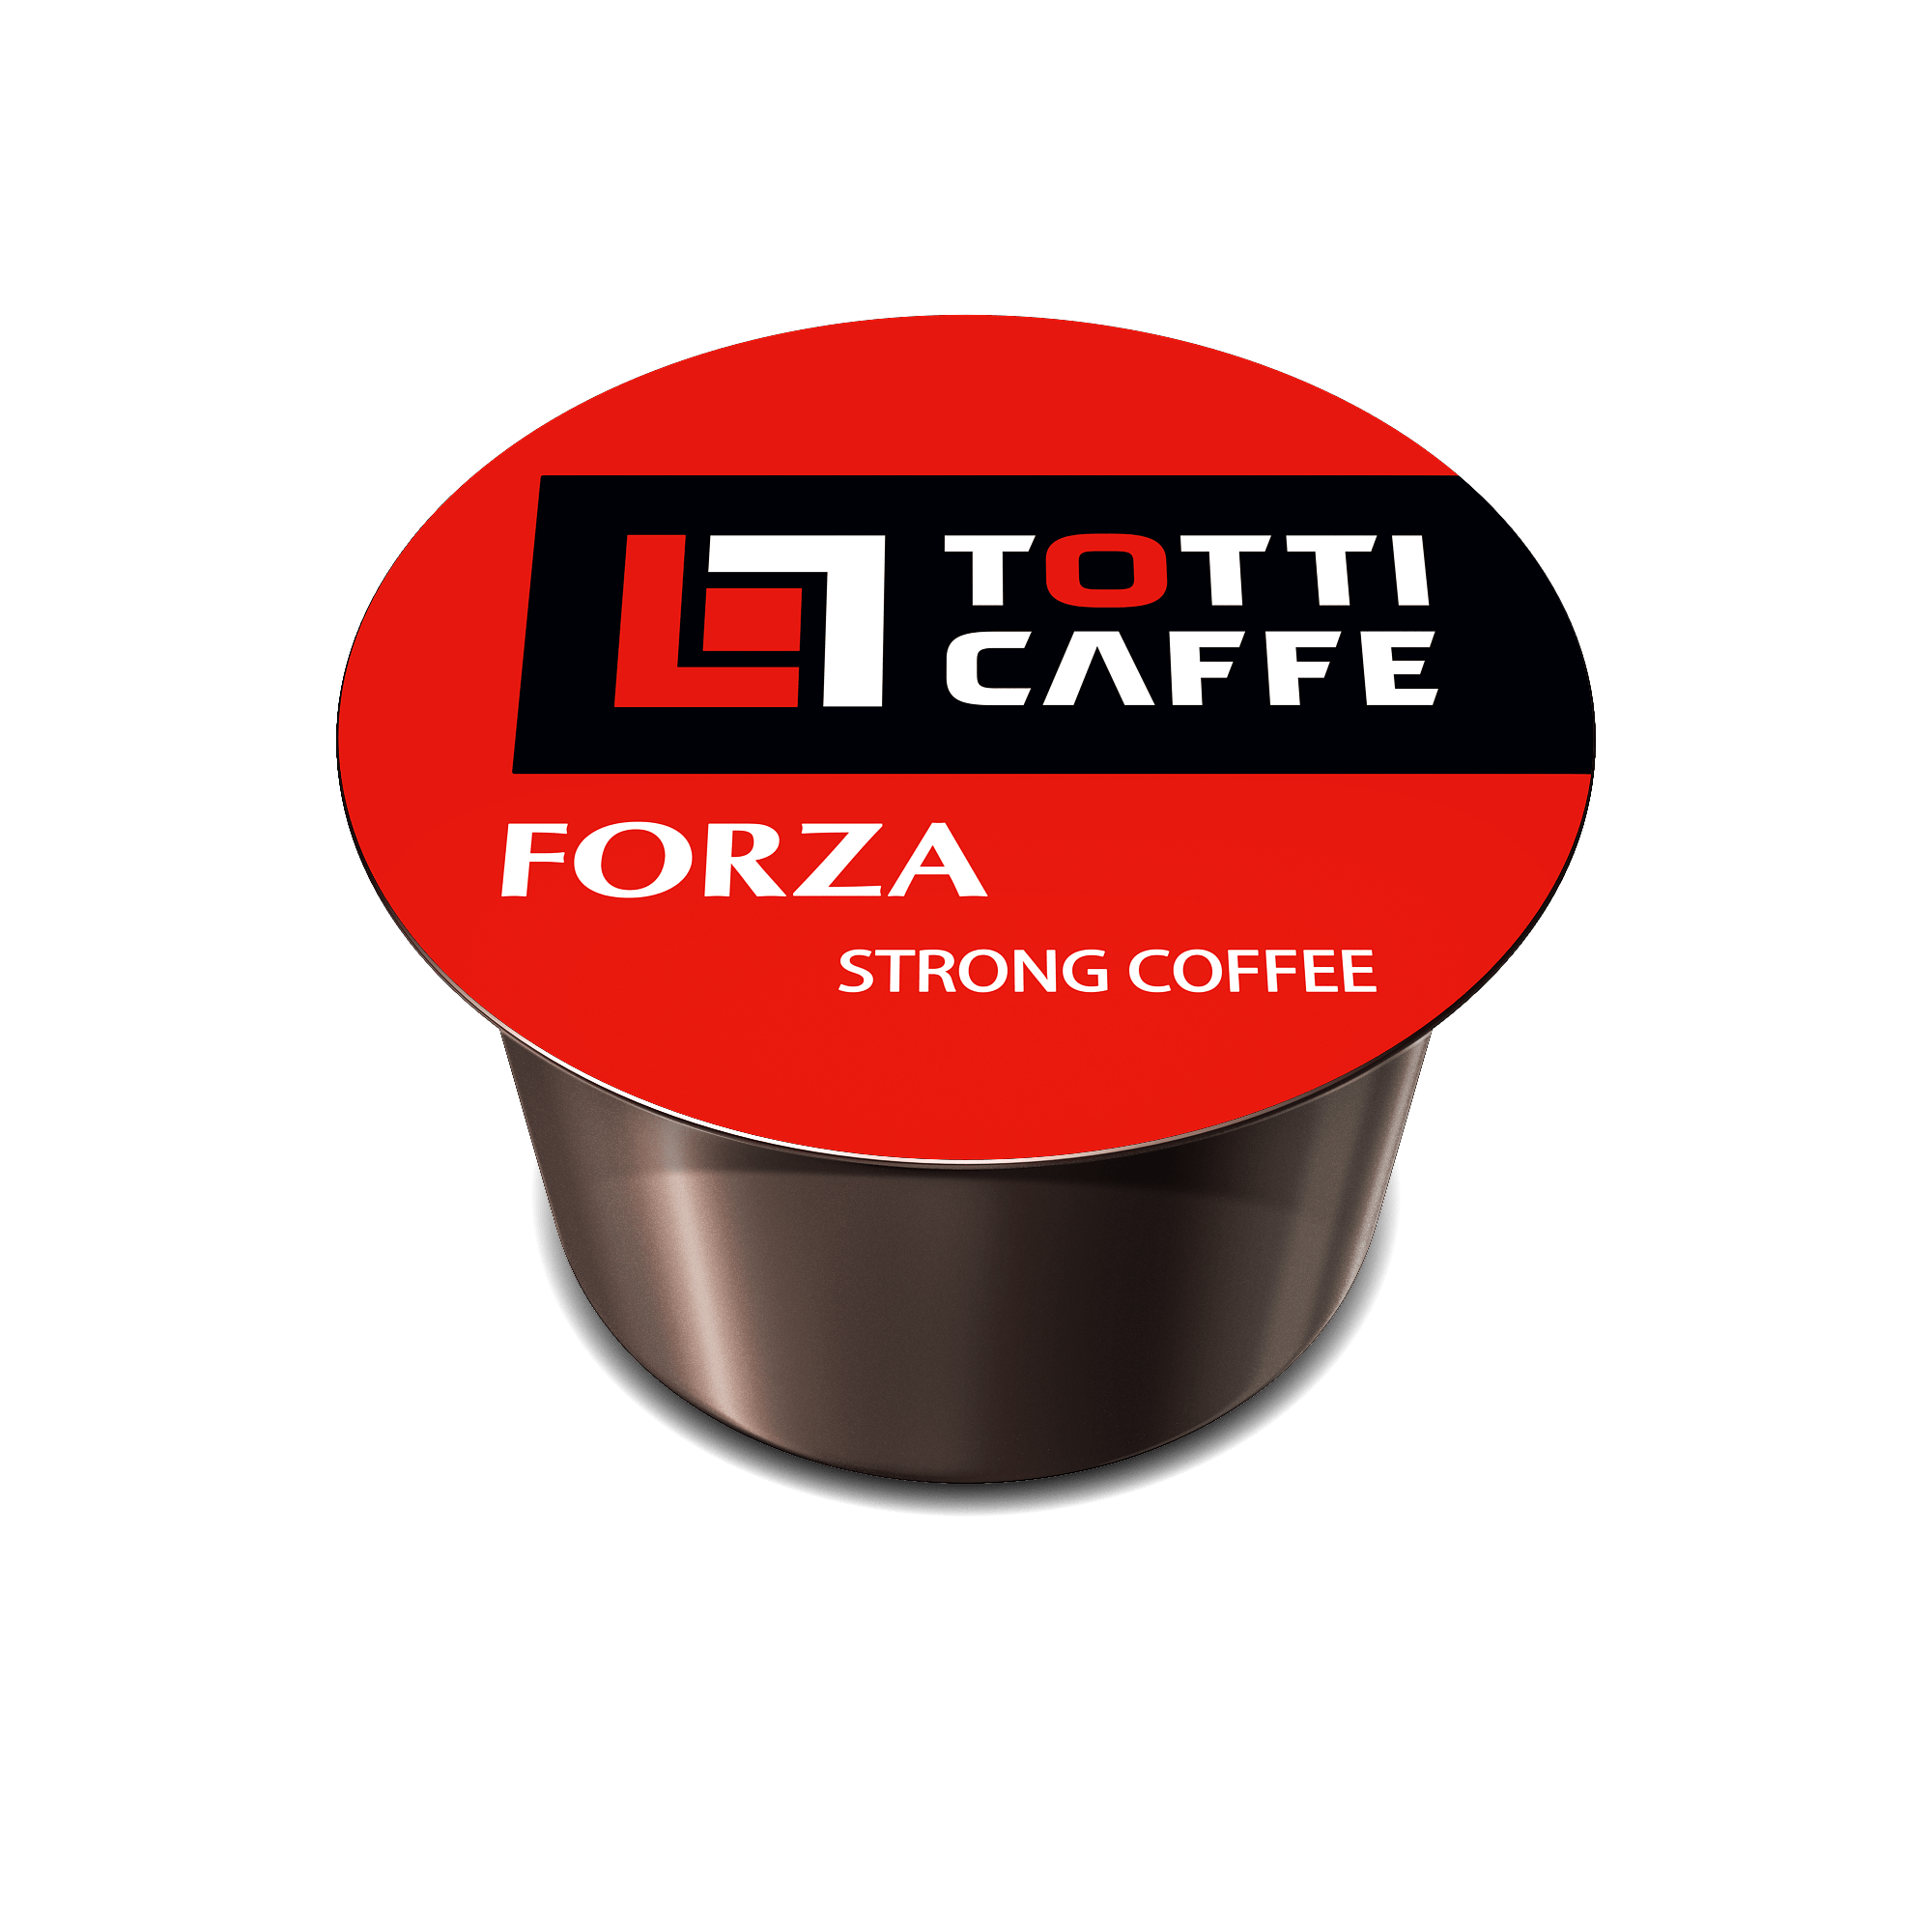 Totti Forza – інтернет-магазин coffice.ua